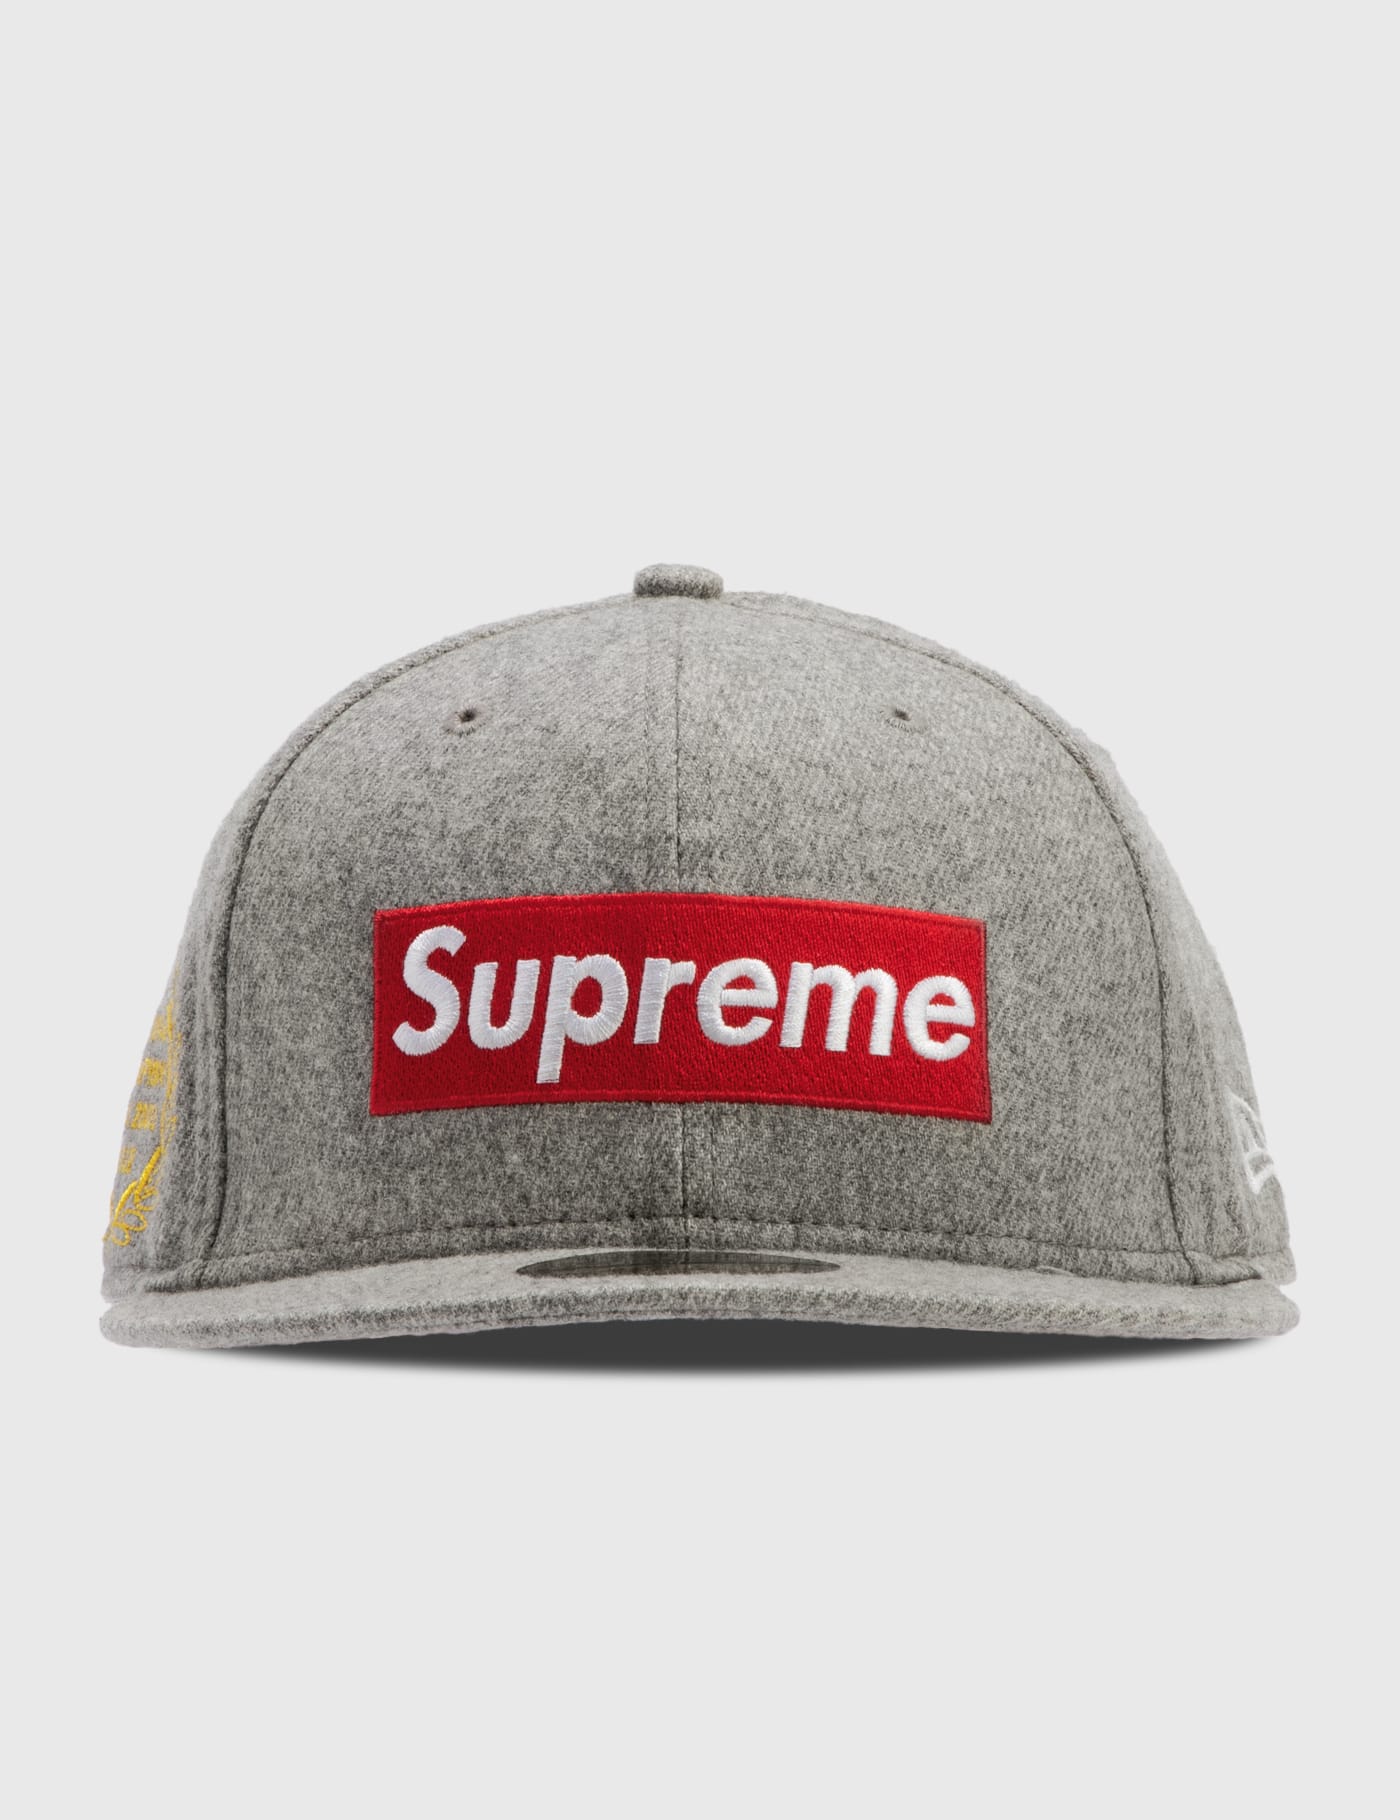 Supreme - Supreme X New Era Wool Cap | HBX - Globally Curated